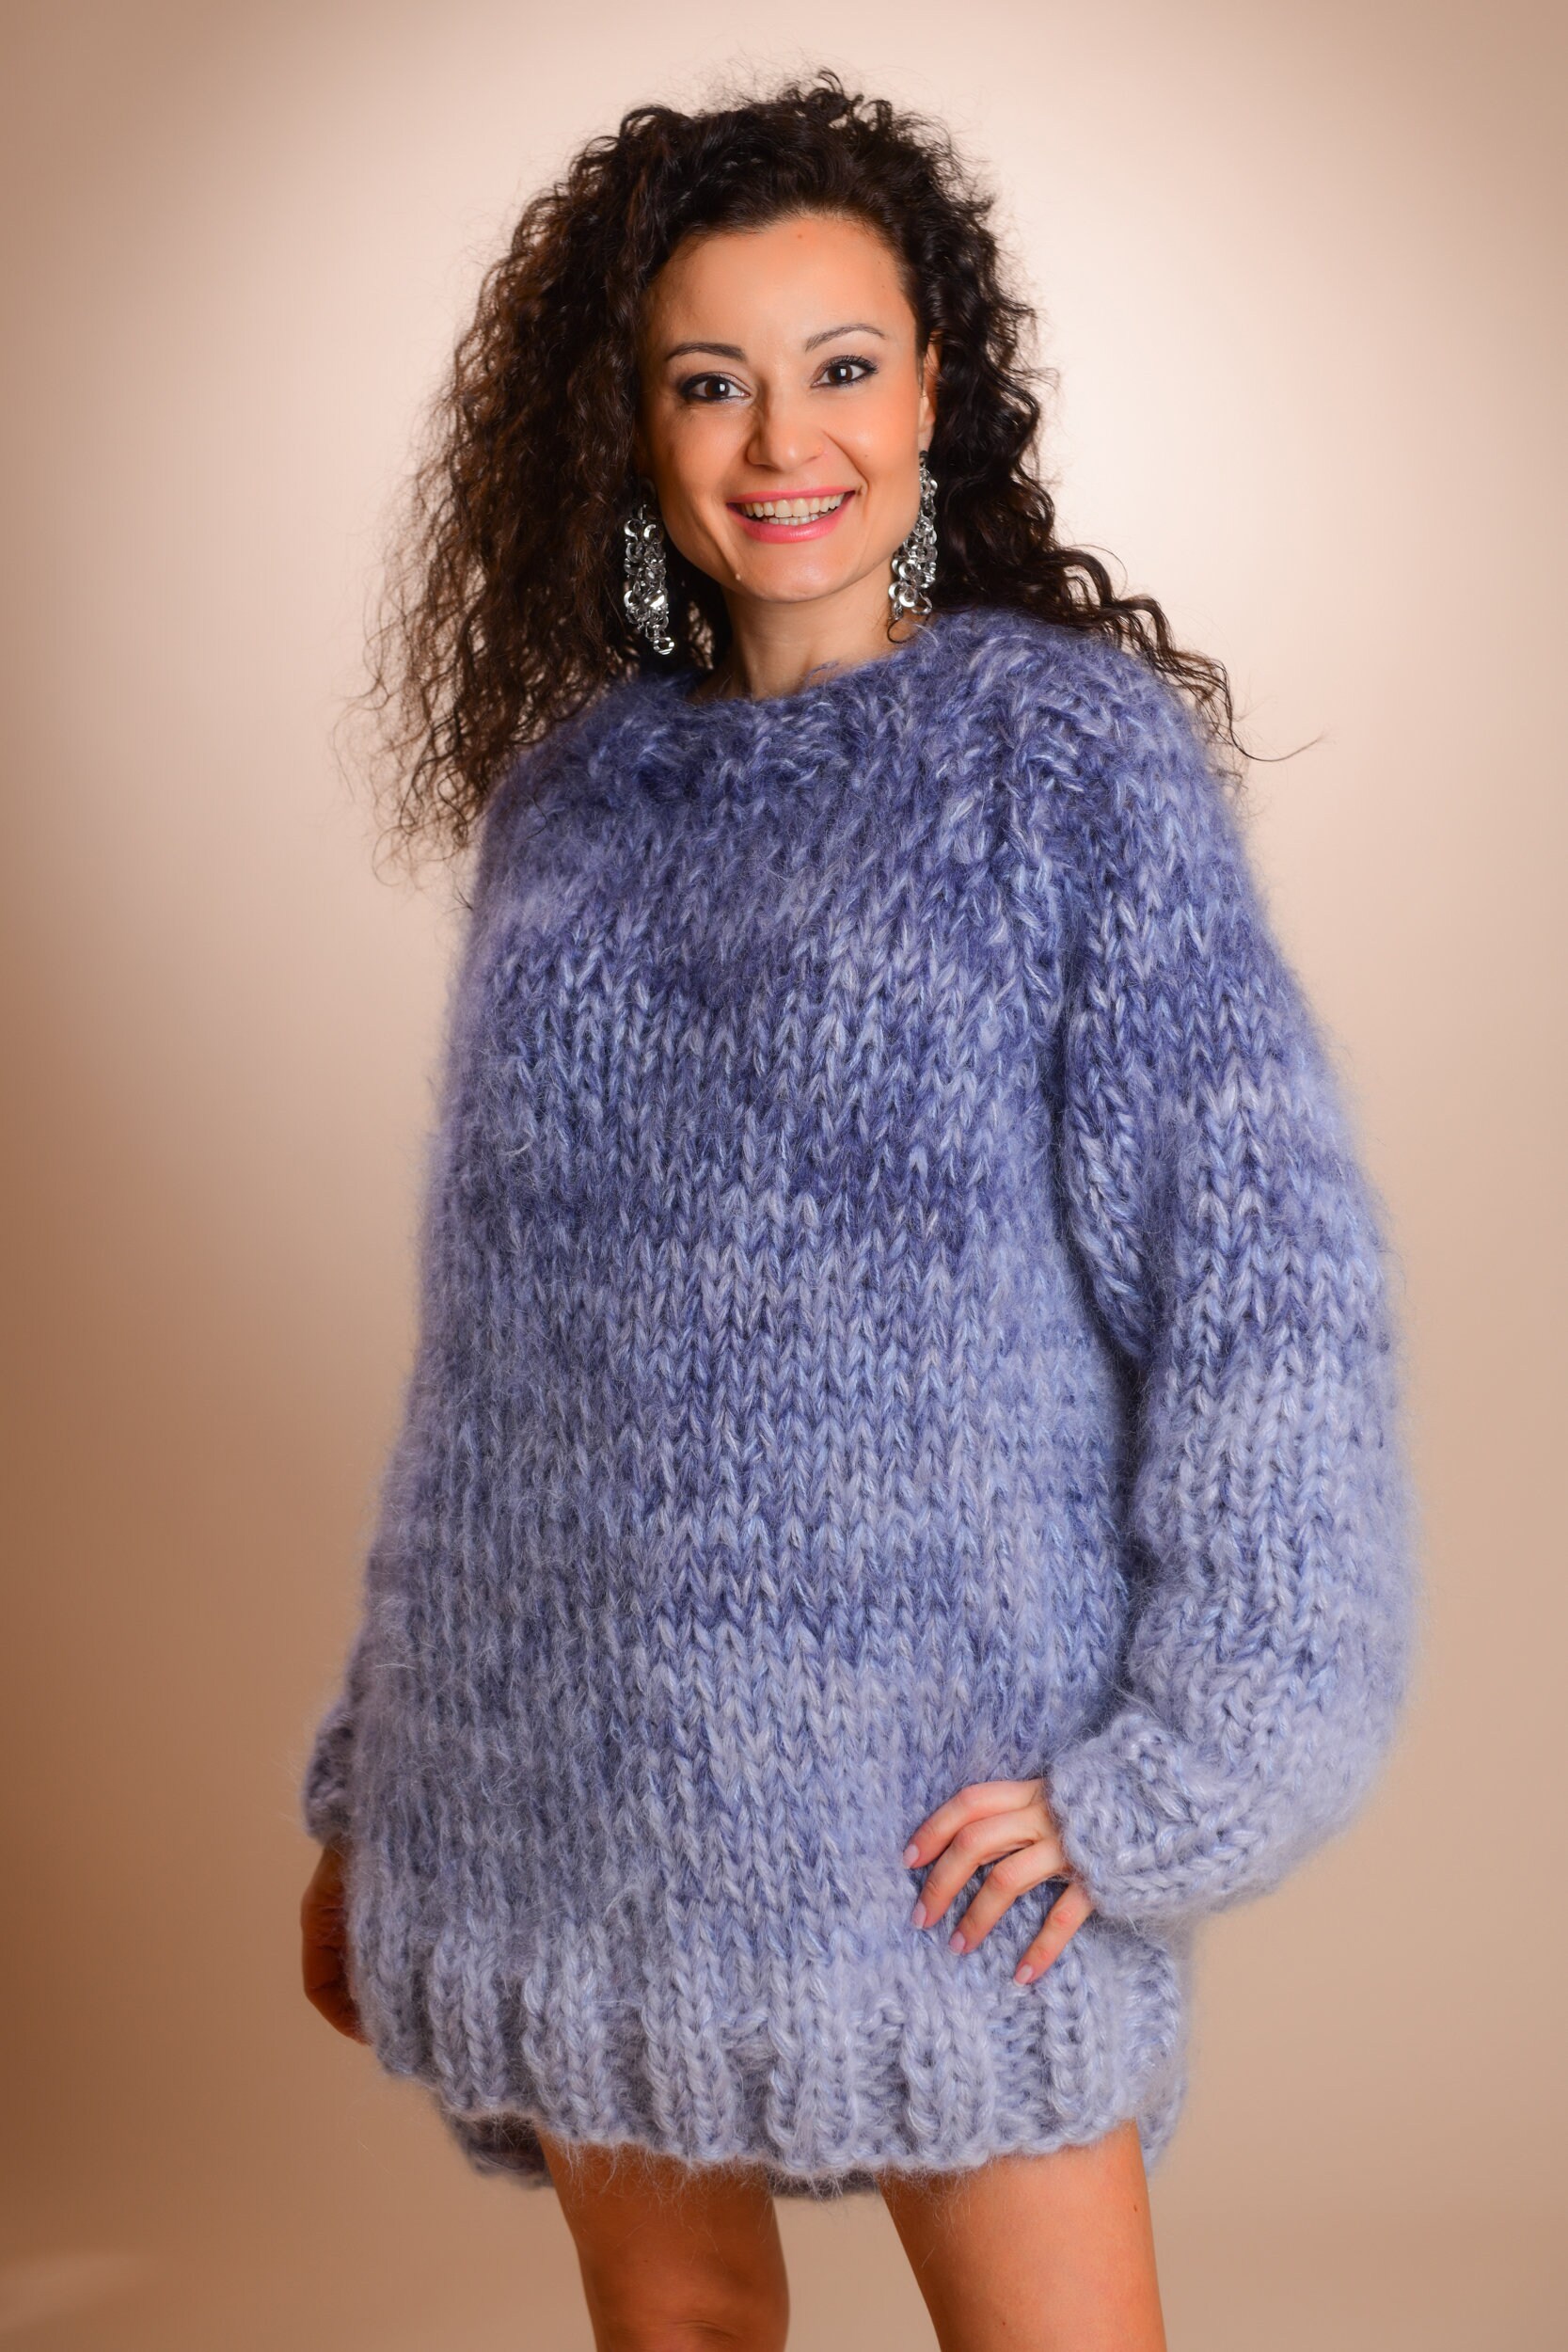 gepersonaliseerde gebreide trui READY TO SHIP Hand knit Mohair Sweater Oversized Sweater Ombre Sweater Kleding Gender-neutrale kleding volwassenen Sweaters relaxte chunky jumper Unisex Sweater 